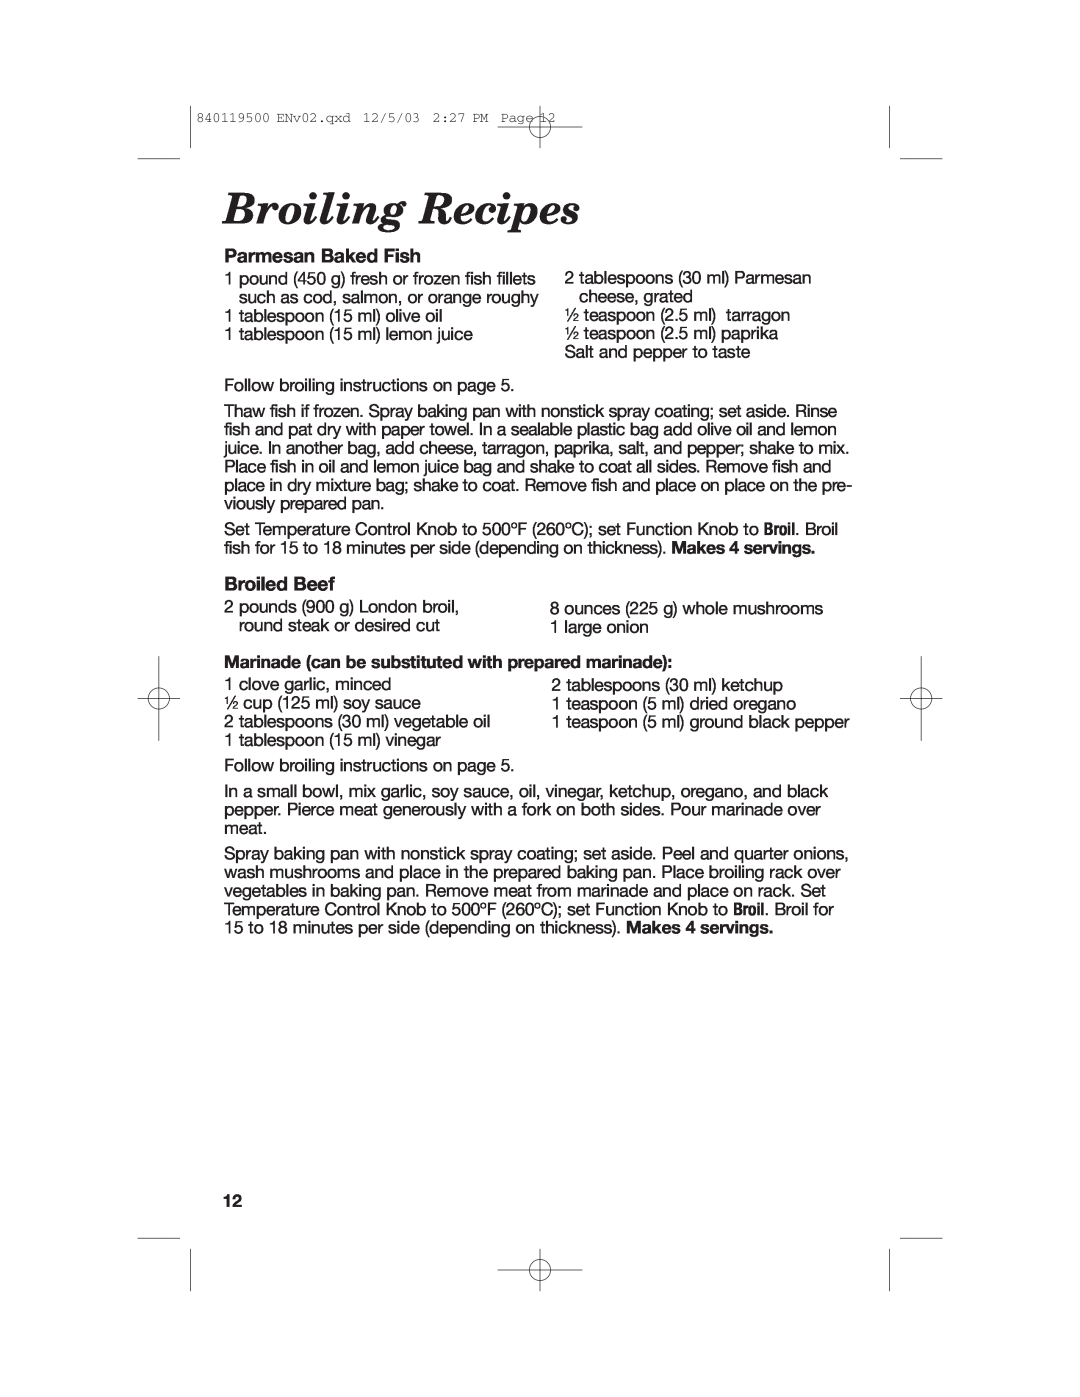 Hamilton Beach 31195 manual Broiling Recipes, Parmesan Baked Fish, Broiled Beef 